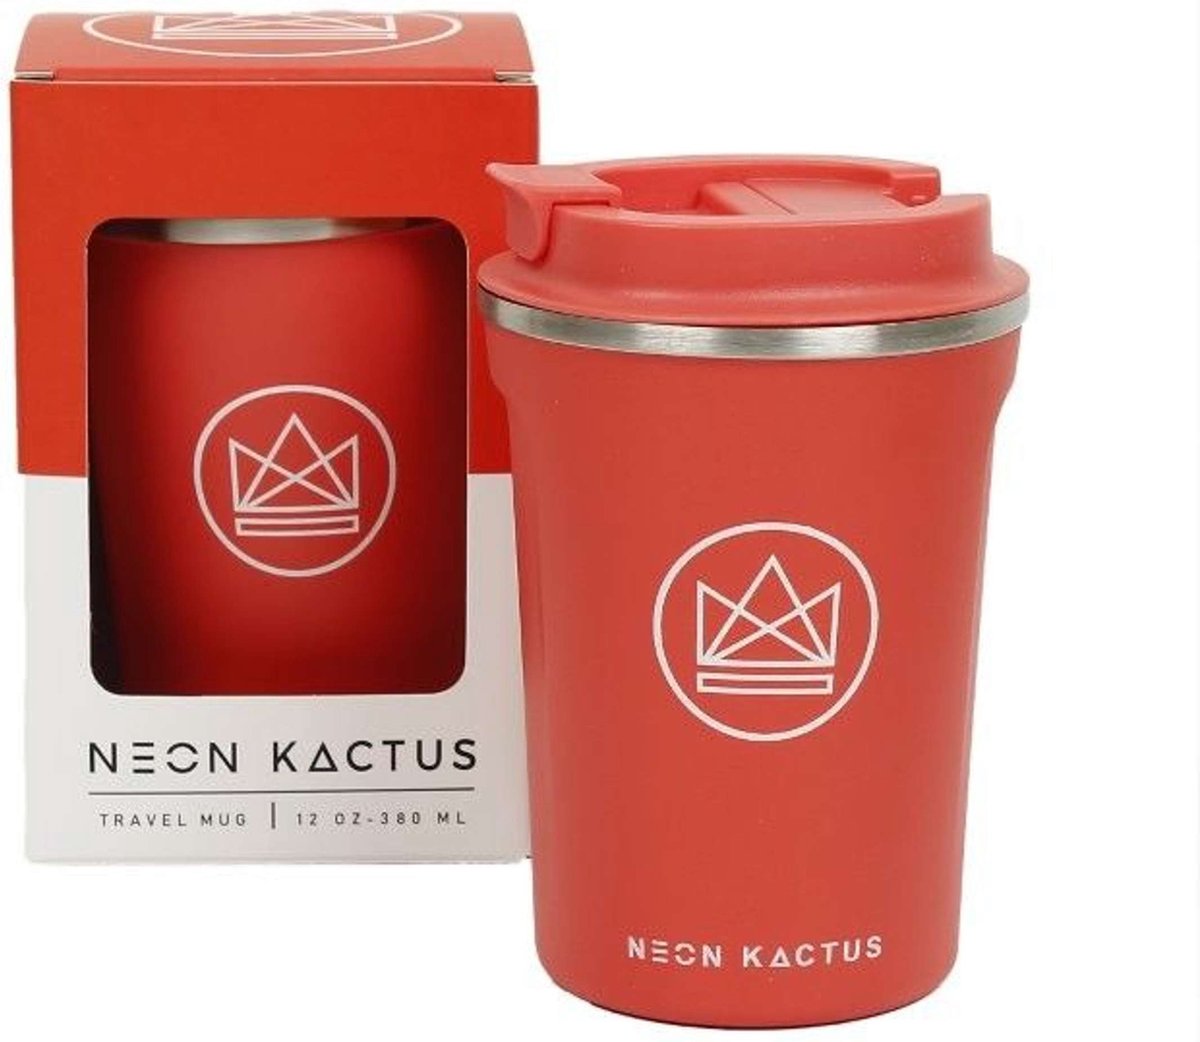 Neon Kactus - Dream Believer Travel Mug 380ml